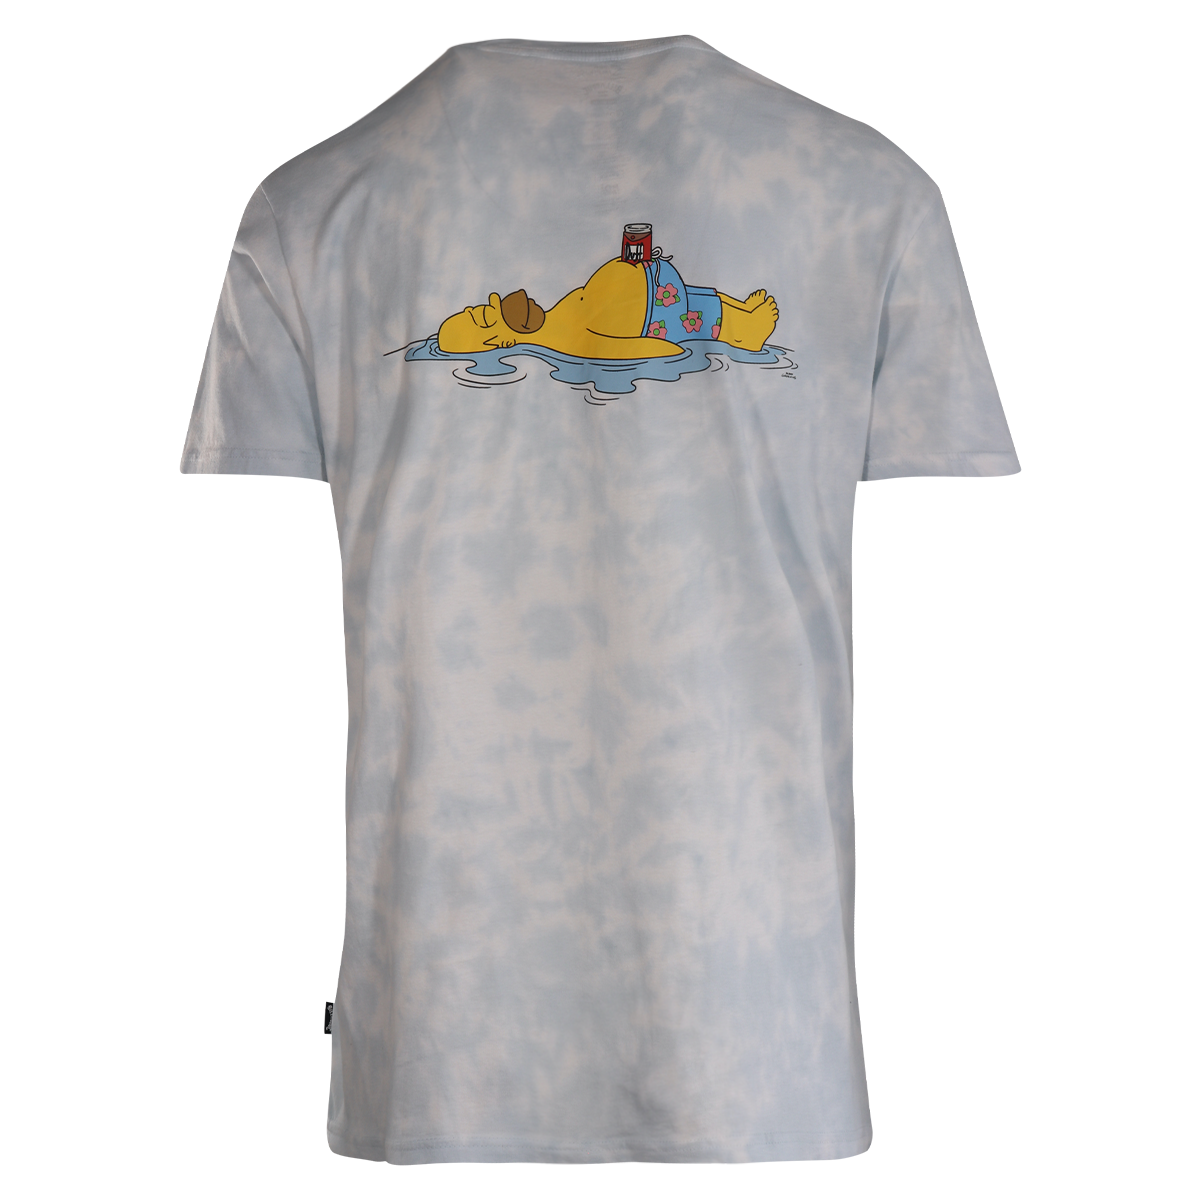 Billabong Men's T-Shirt x The Simpsons Blue Tye-Dye S/S (S10)